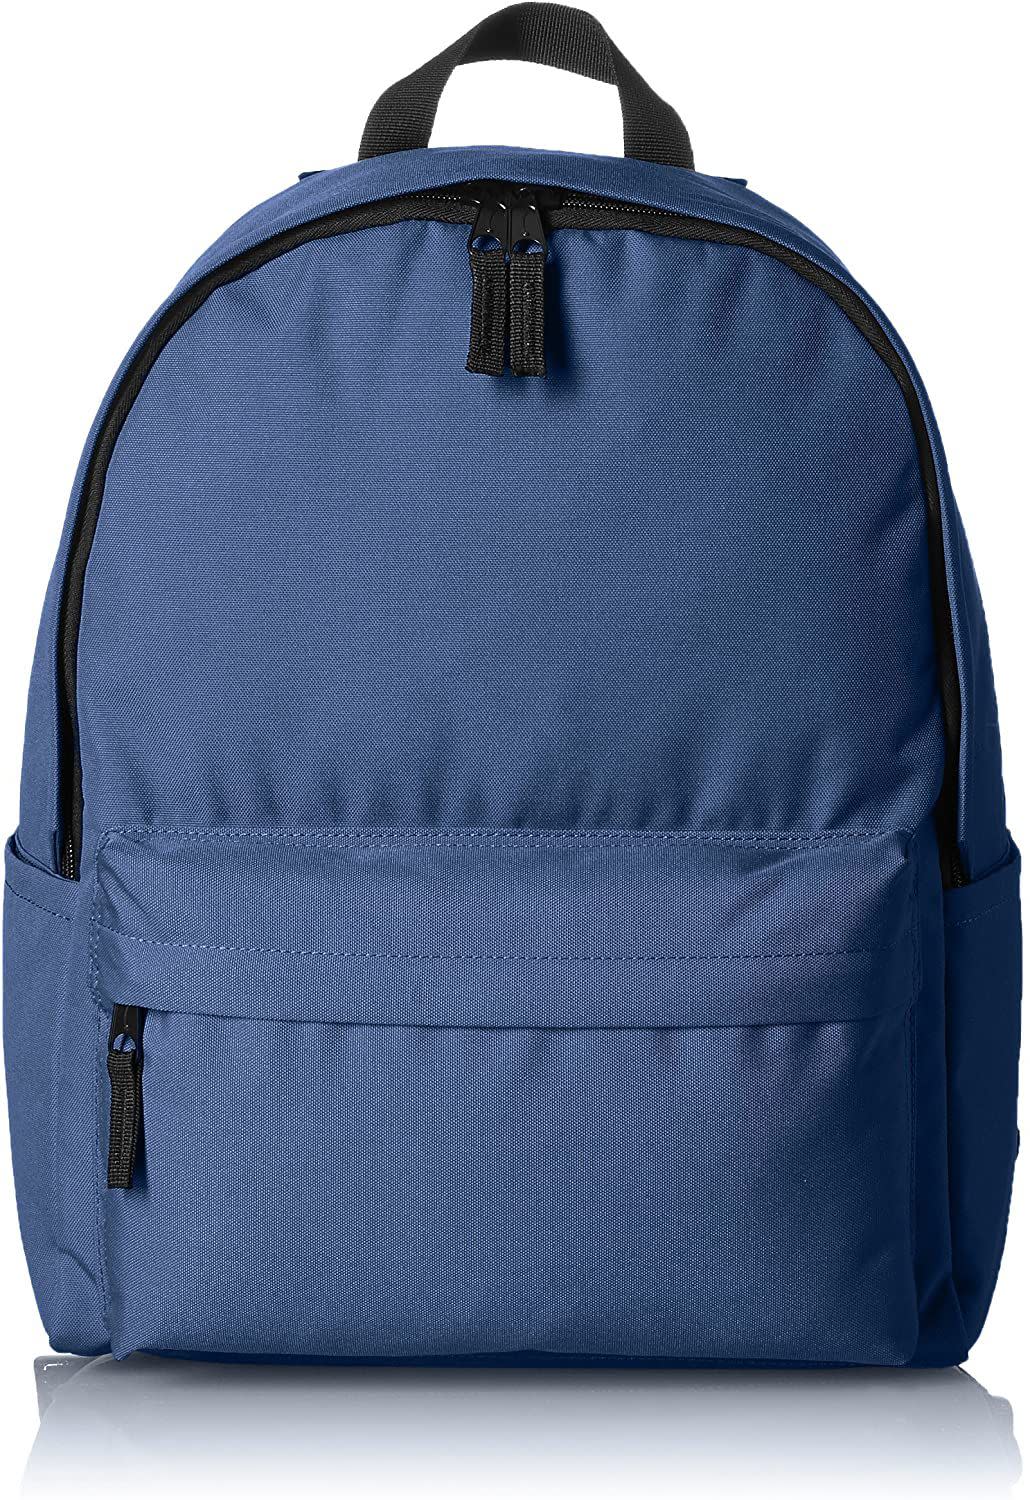 amazonbasics classic backpack